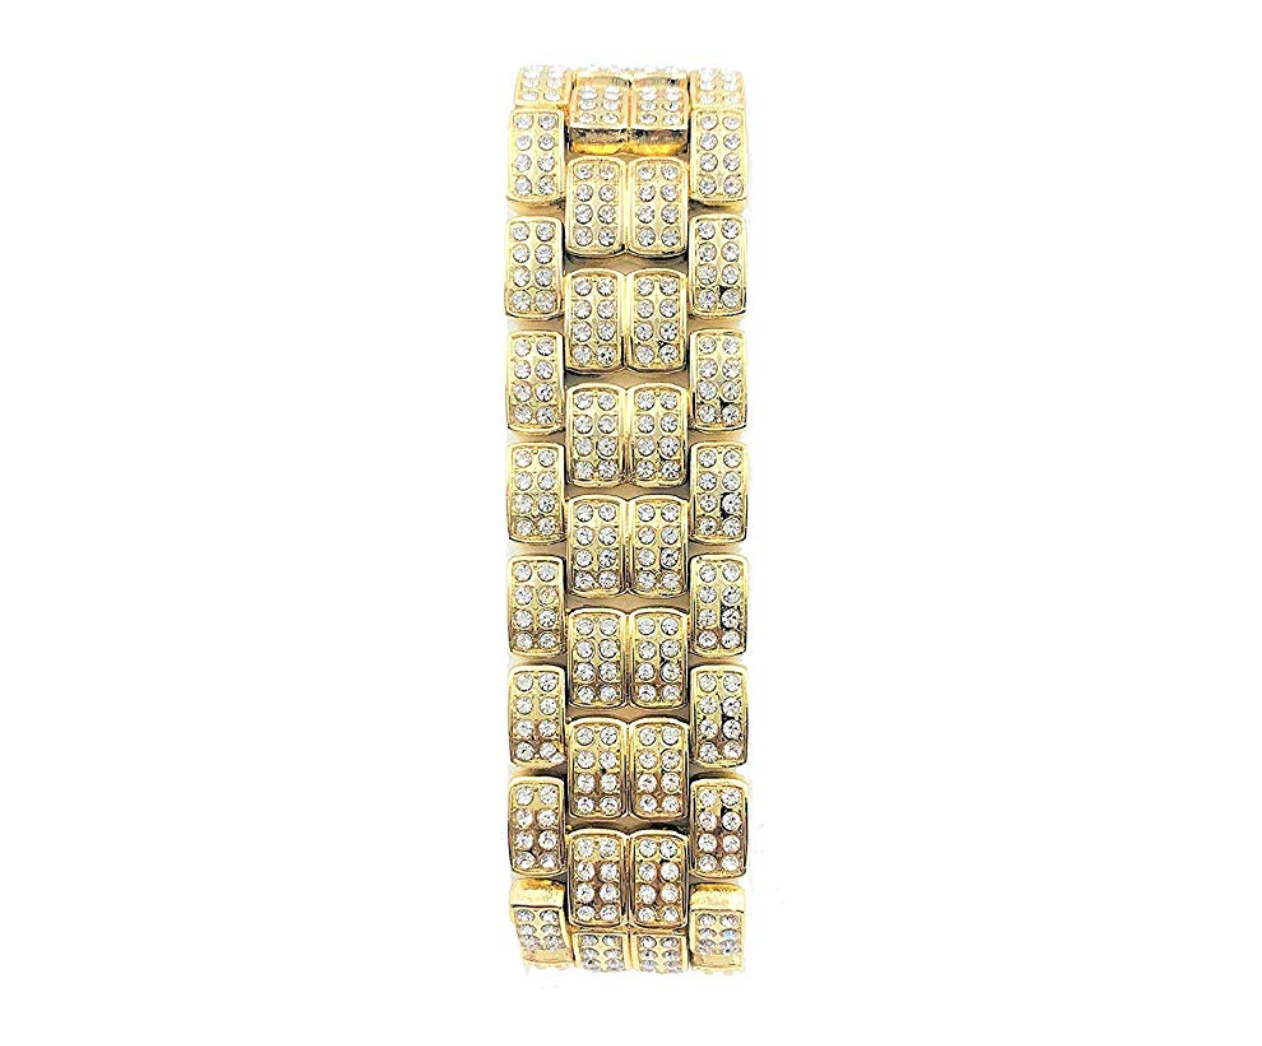 Black Face Gold Color Watch Simulated Diamond Cuban Link Chain Hip Hop Ring Bundle Bracelet Earrings Gift Set